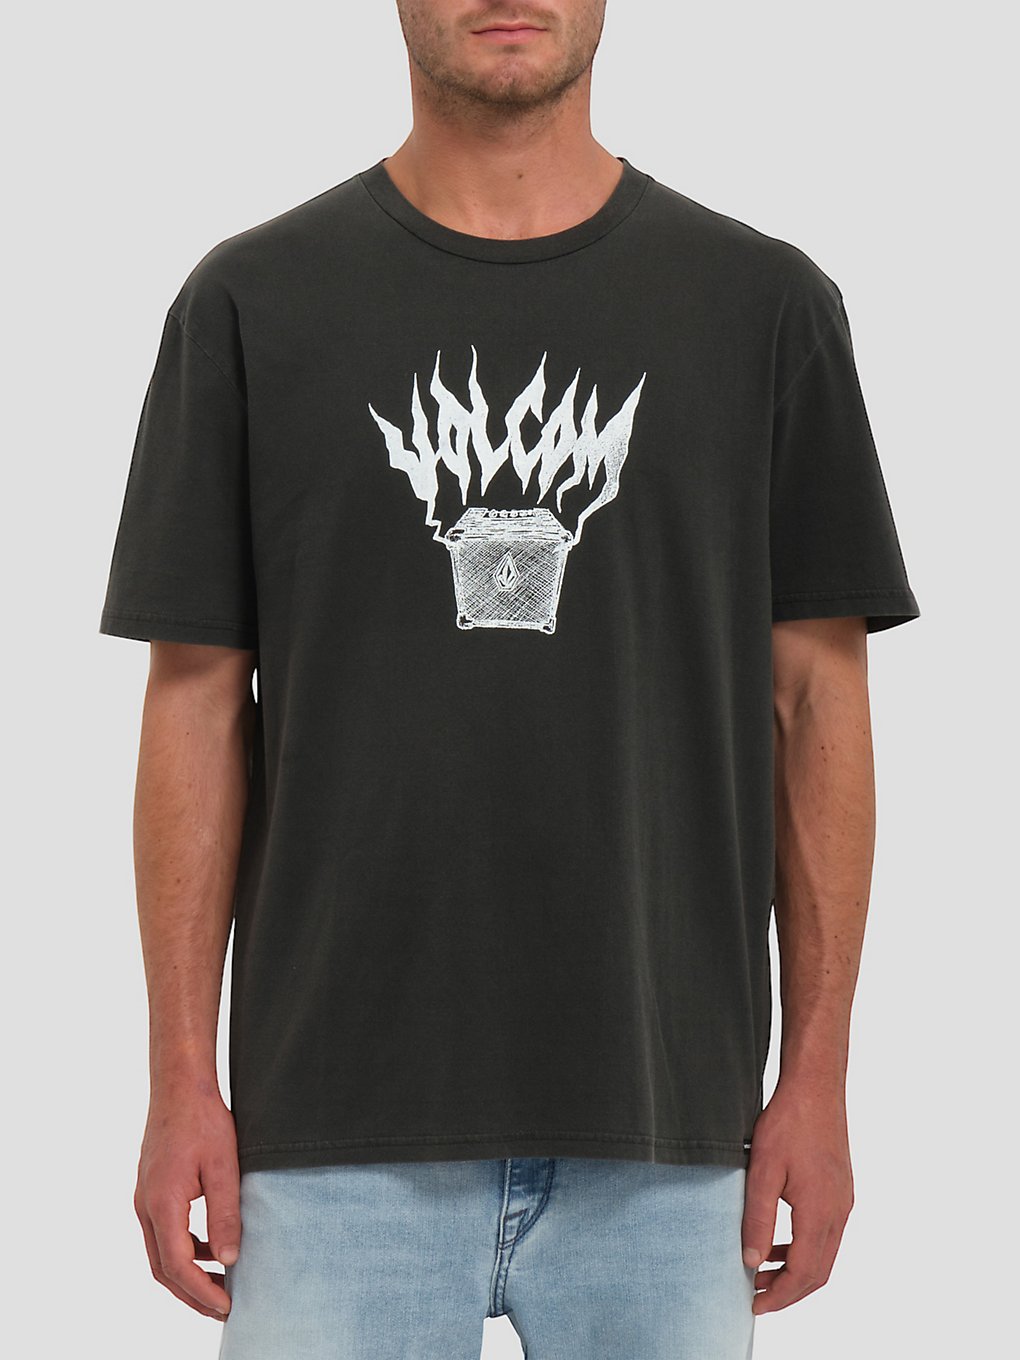 Volcom Amplified Stone Pw T-Shirt black kaufen